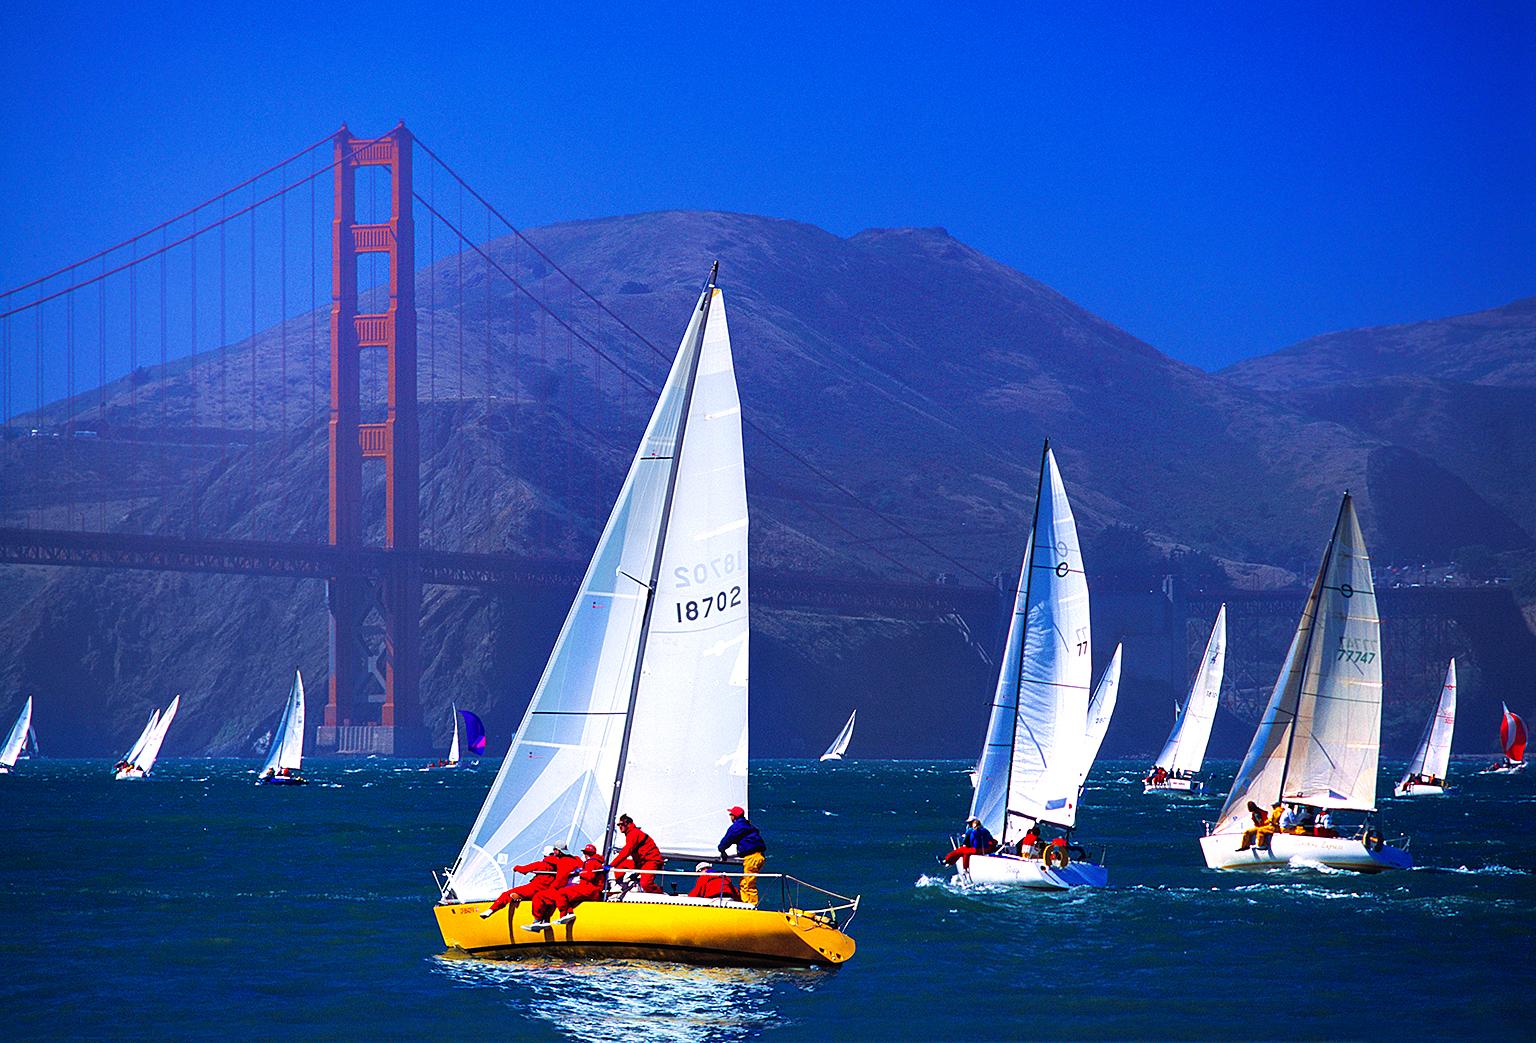 Mitchell Funk Landscape Photograph - Sailboat at Golden Gate Bridge San Francisco 